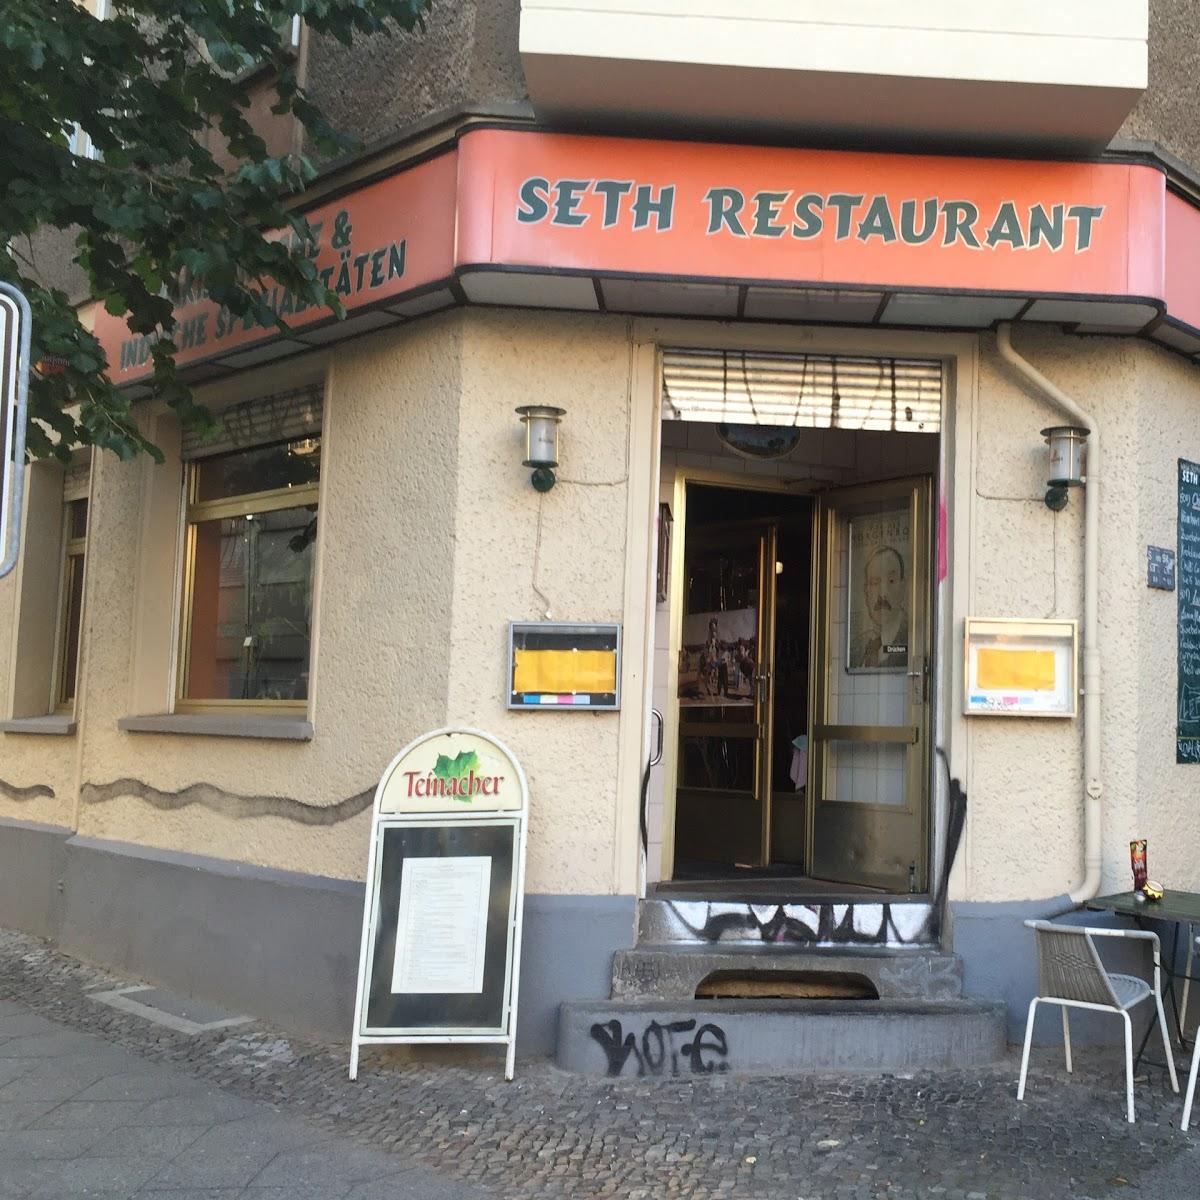 Restaurant "Seth Restaurant" in  Berlin